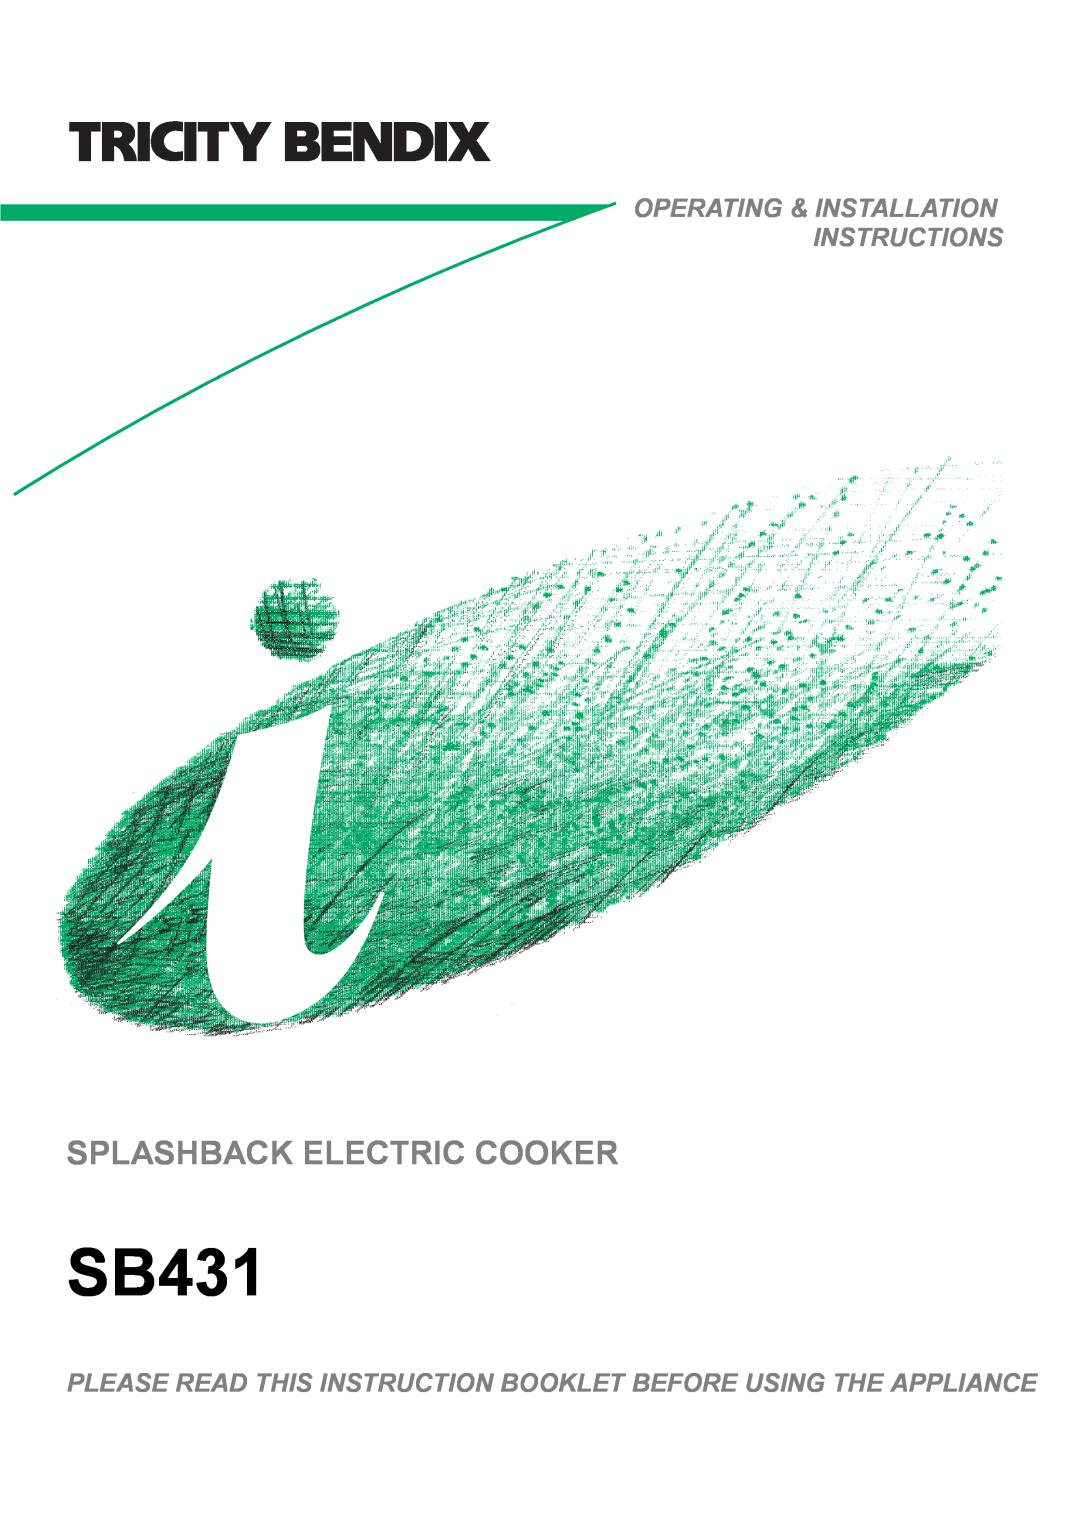 Tricity Bendix SB431 installation instructions Splashback Electric Cooker, Operating & Installation Instructions 